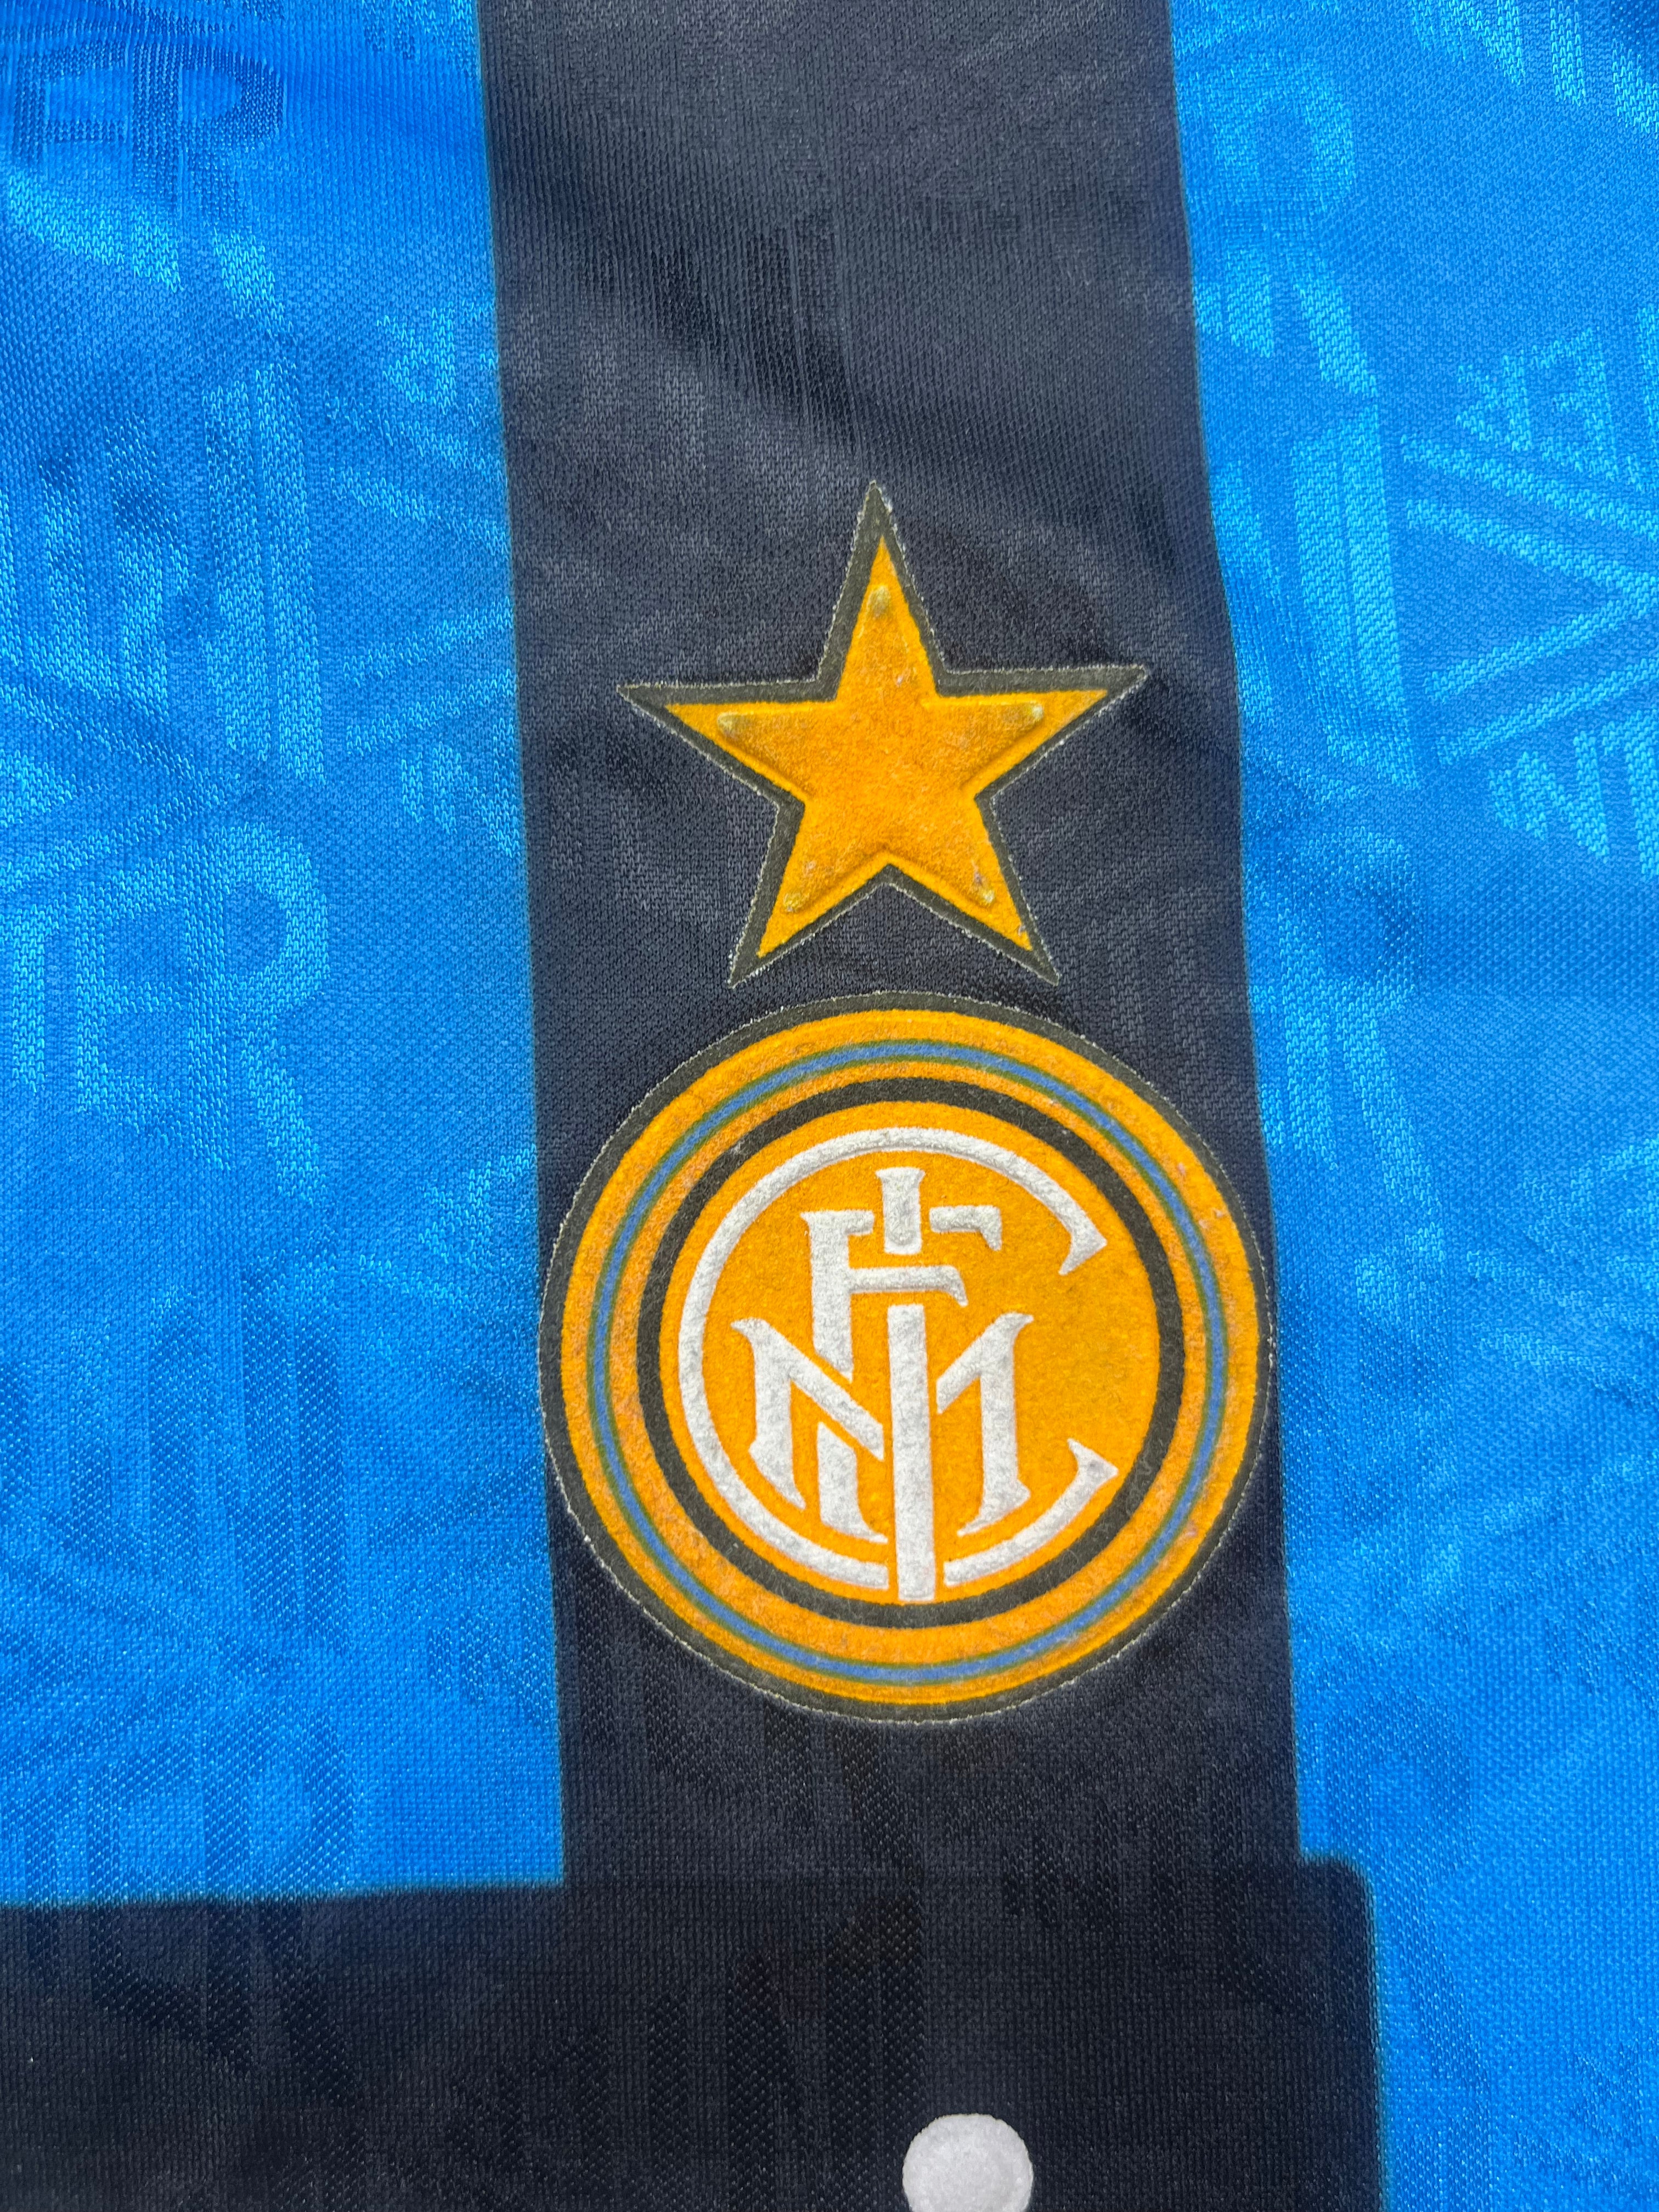 1992/94 Inter Milan Home Shirt (L) 9/10